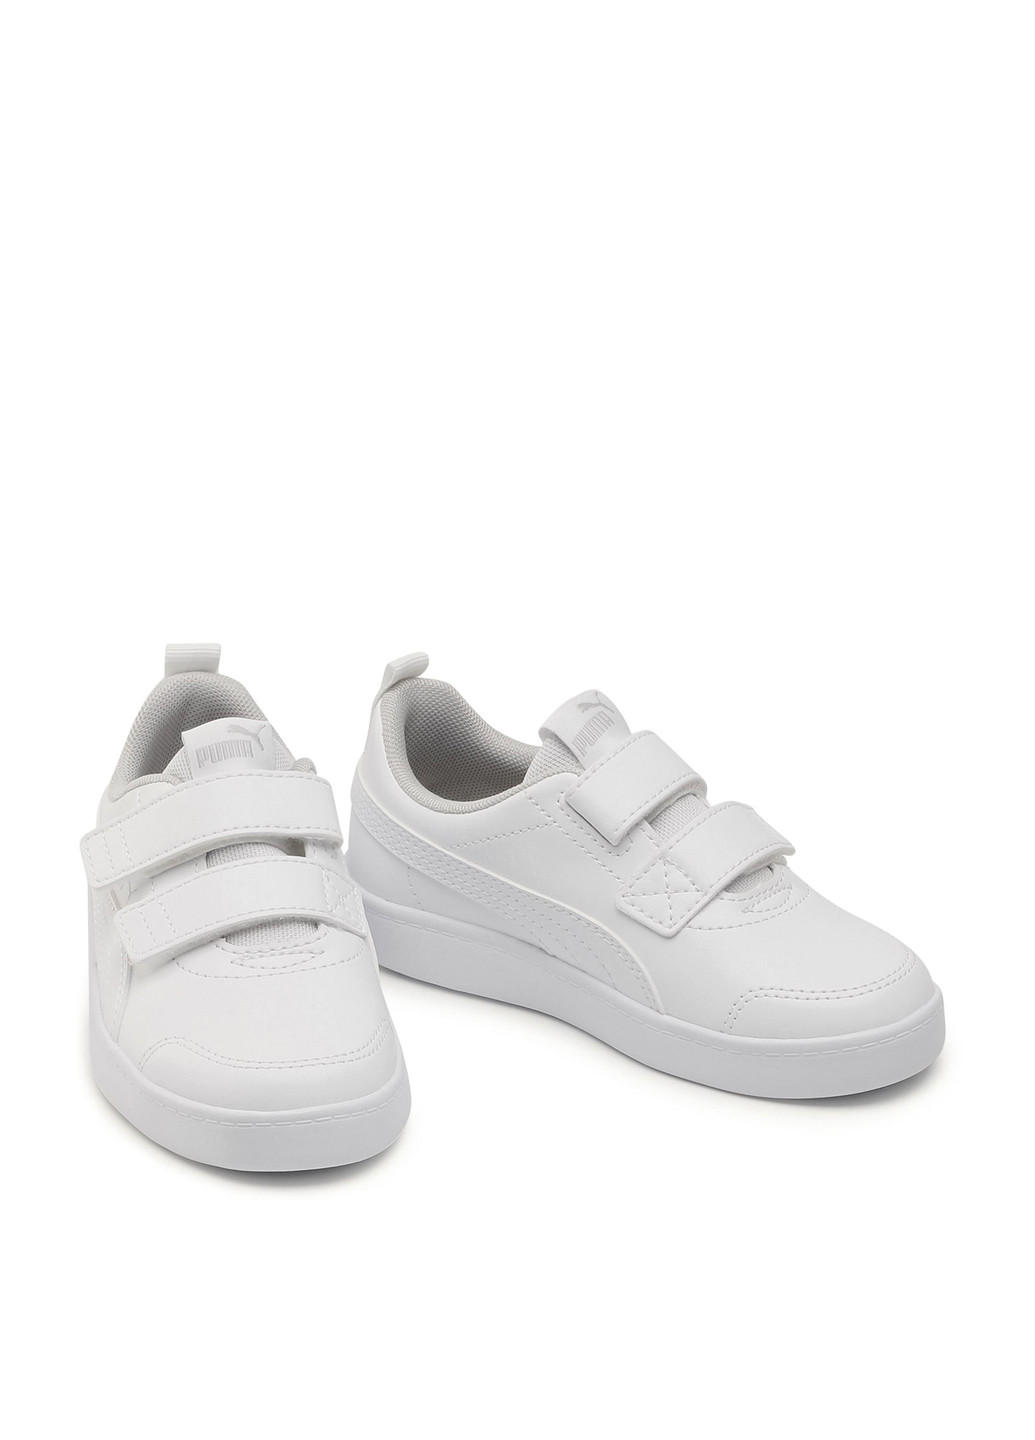 Белые демисезонные кросівки  courtflex v2 v ps 37154304 Puma COURTFLEX V2 V PS 3715430